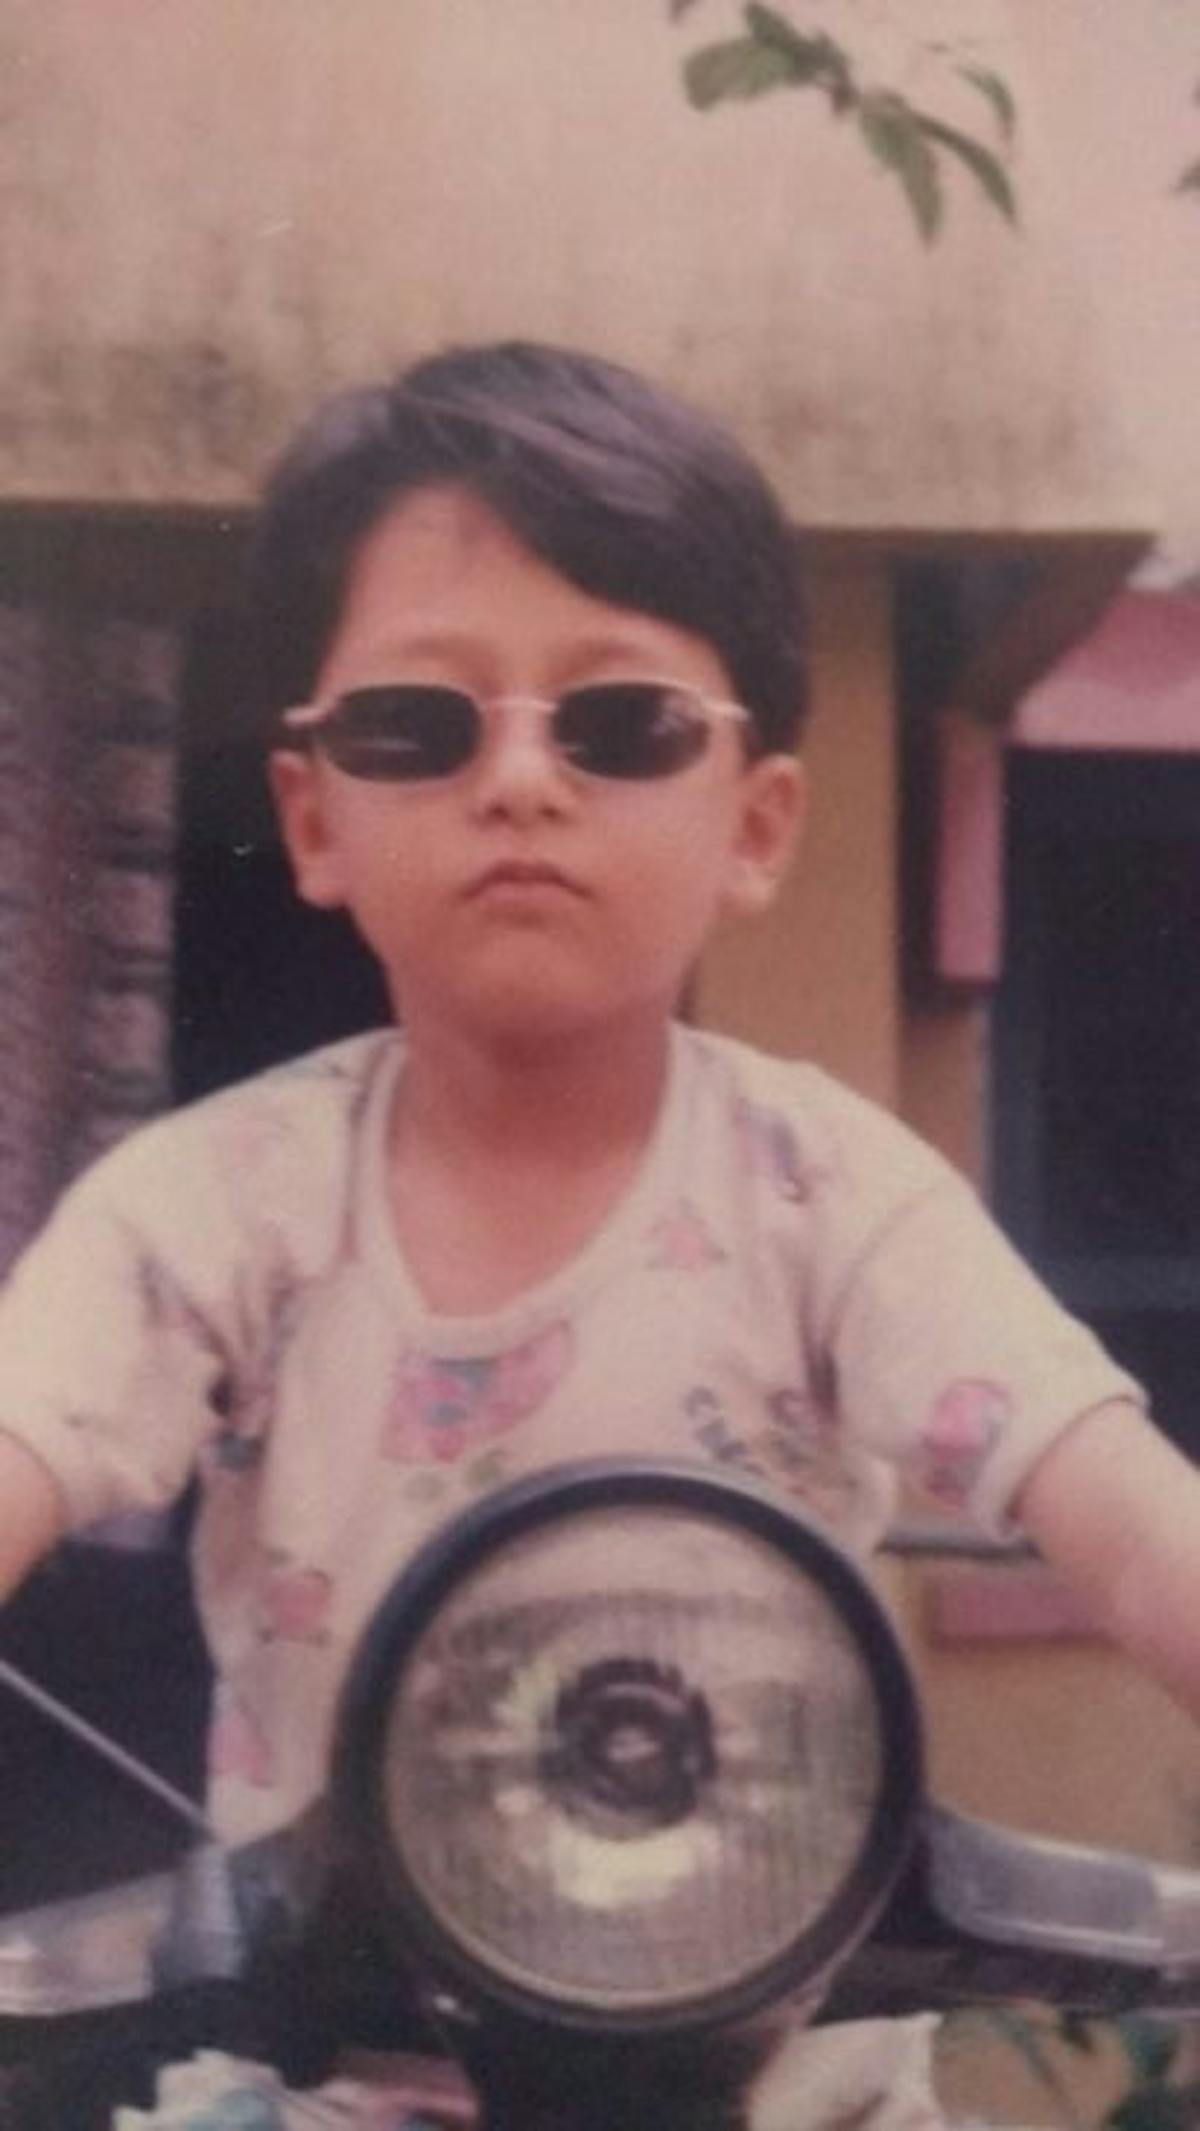 Kid with sunglasses